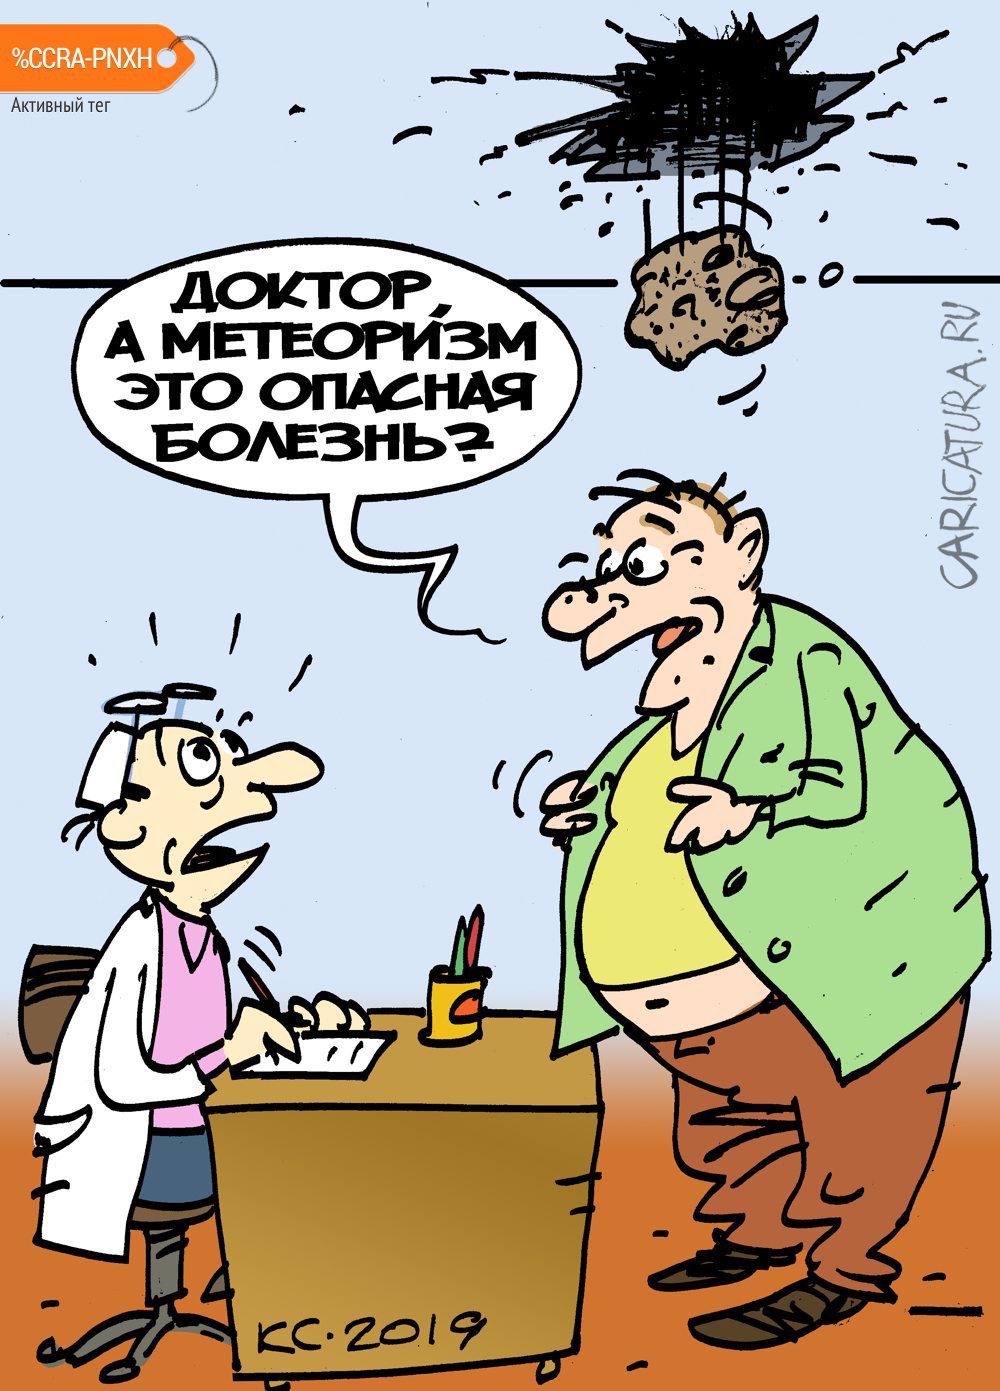 Карикатура "Метеоризм", Вячеслав Капрельянц